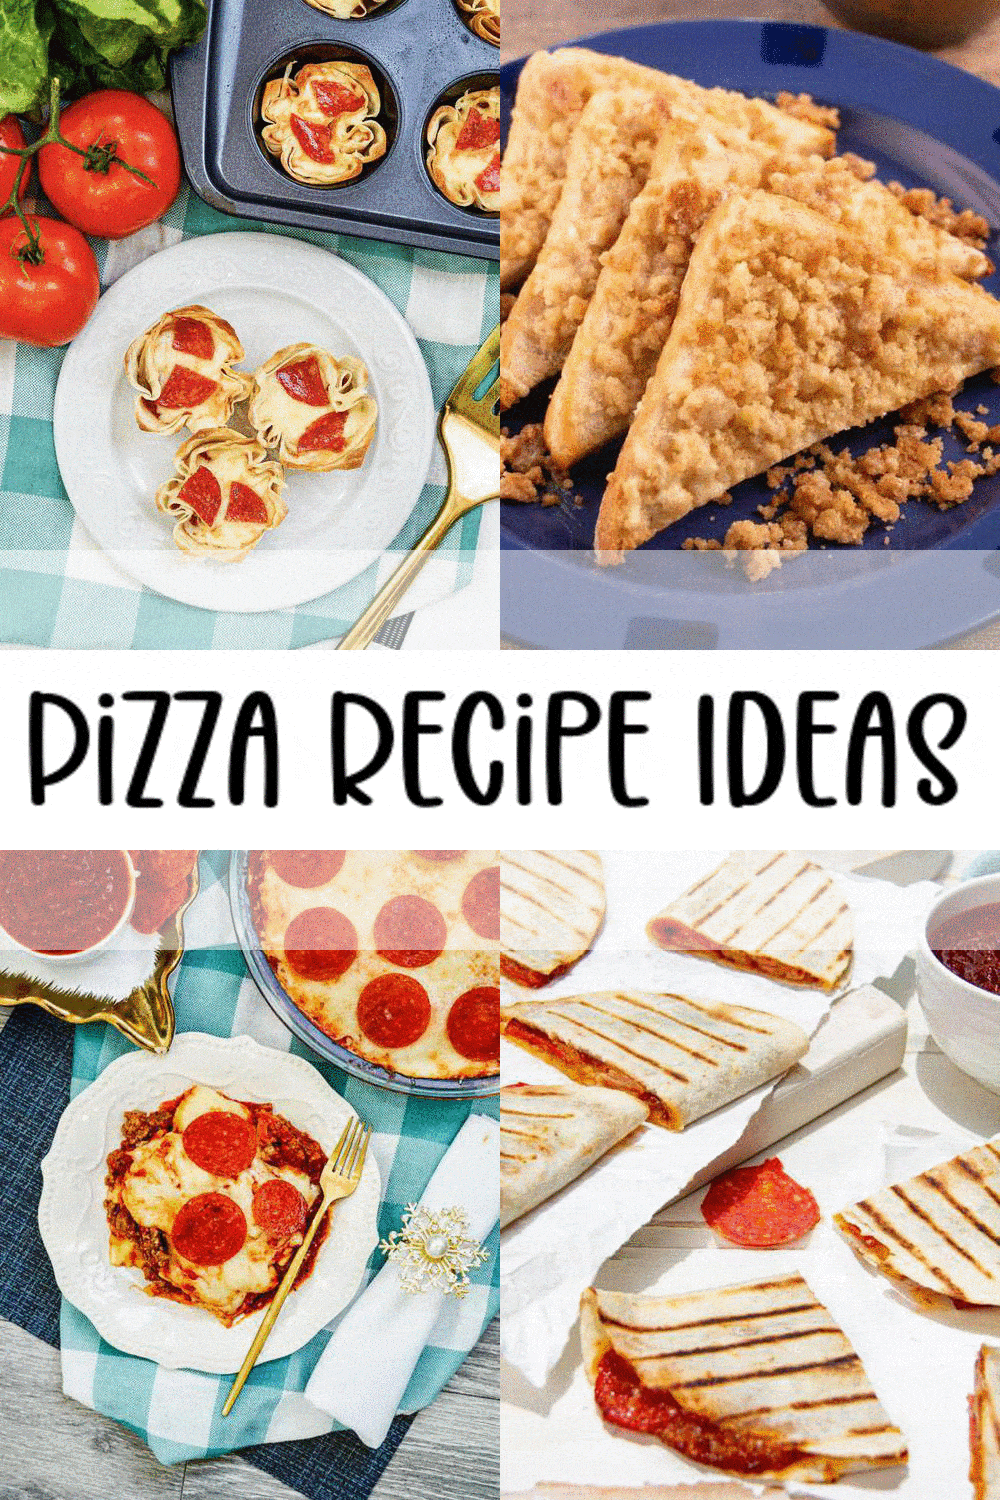 10 Pizza Recipes - Best Pizza Ideas